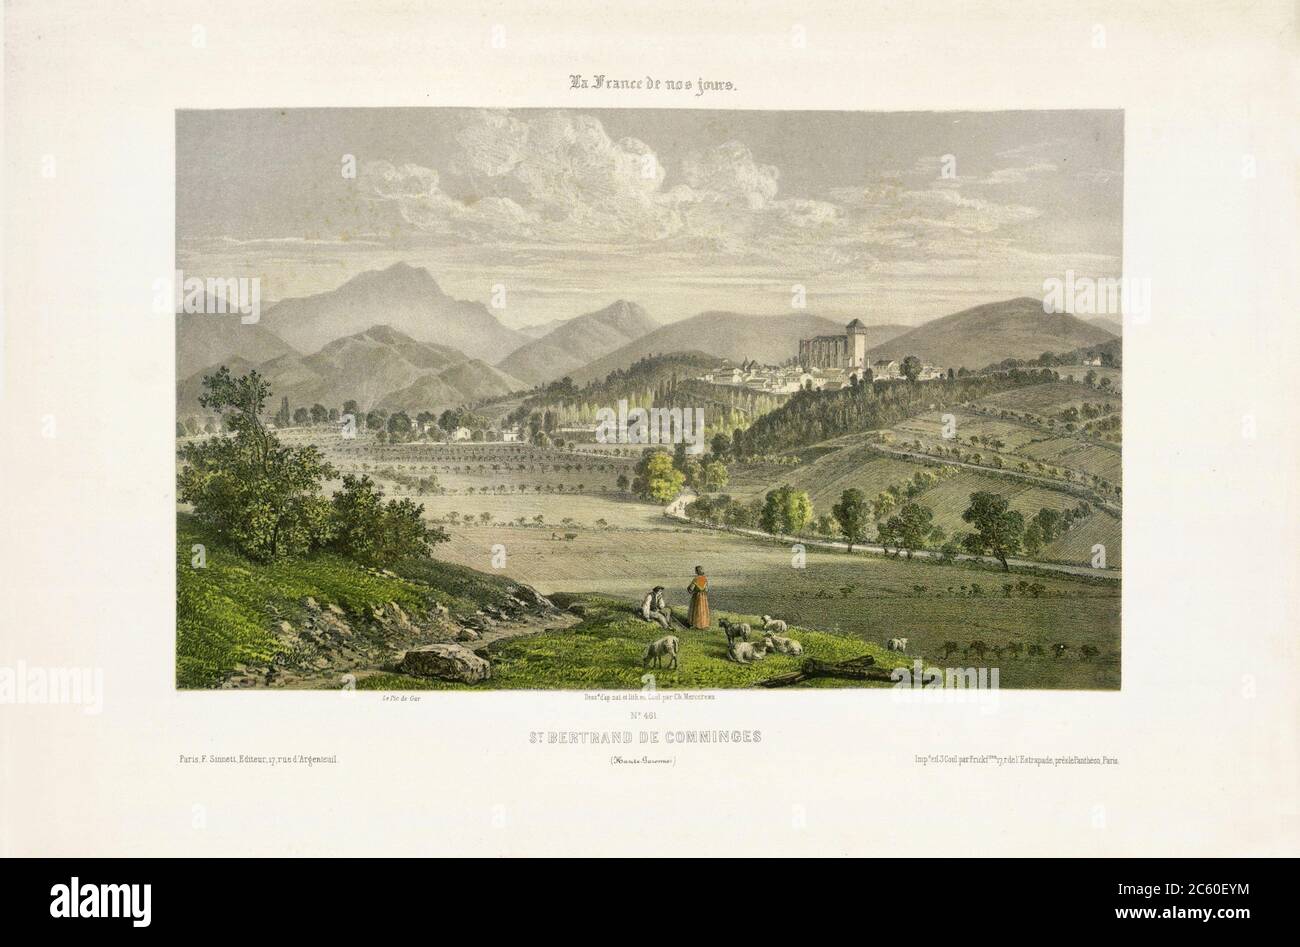 Saint-Bertrand-de-Comminges. Haute-Garonne, Frankreich. Gravur des 19. Jahrhunderts Stockfoto